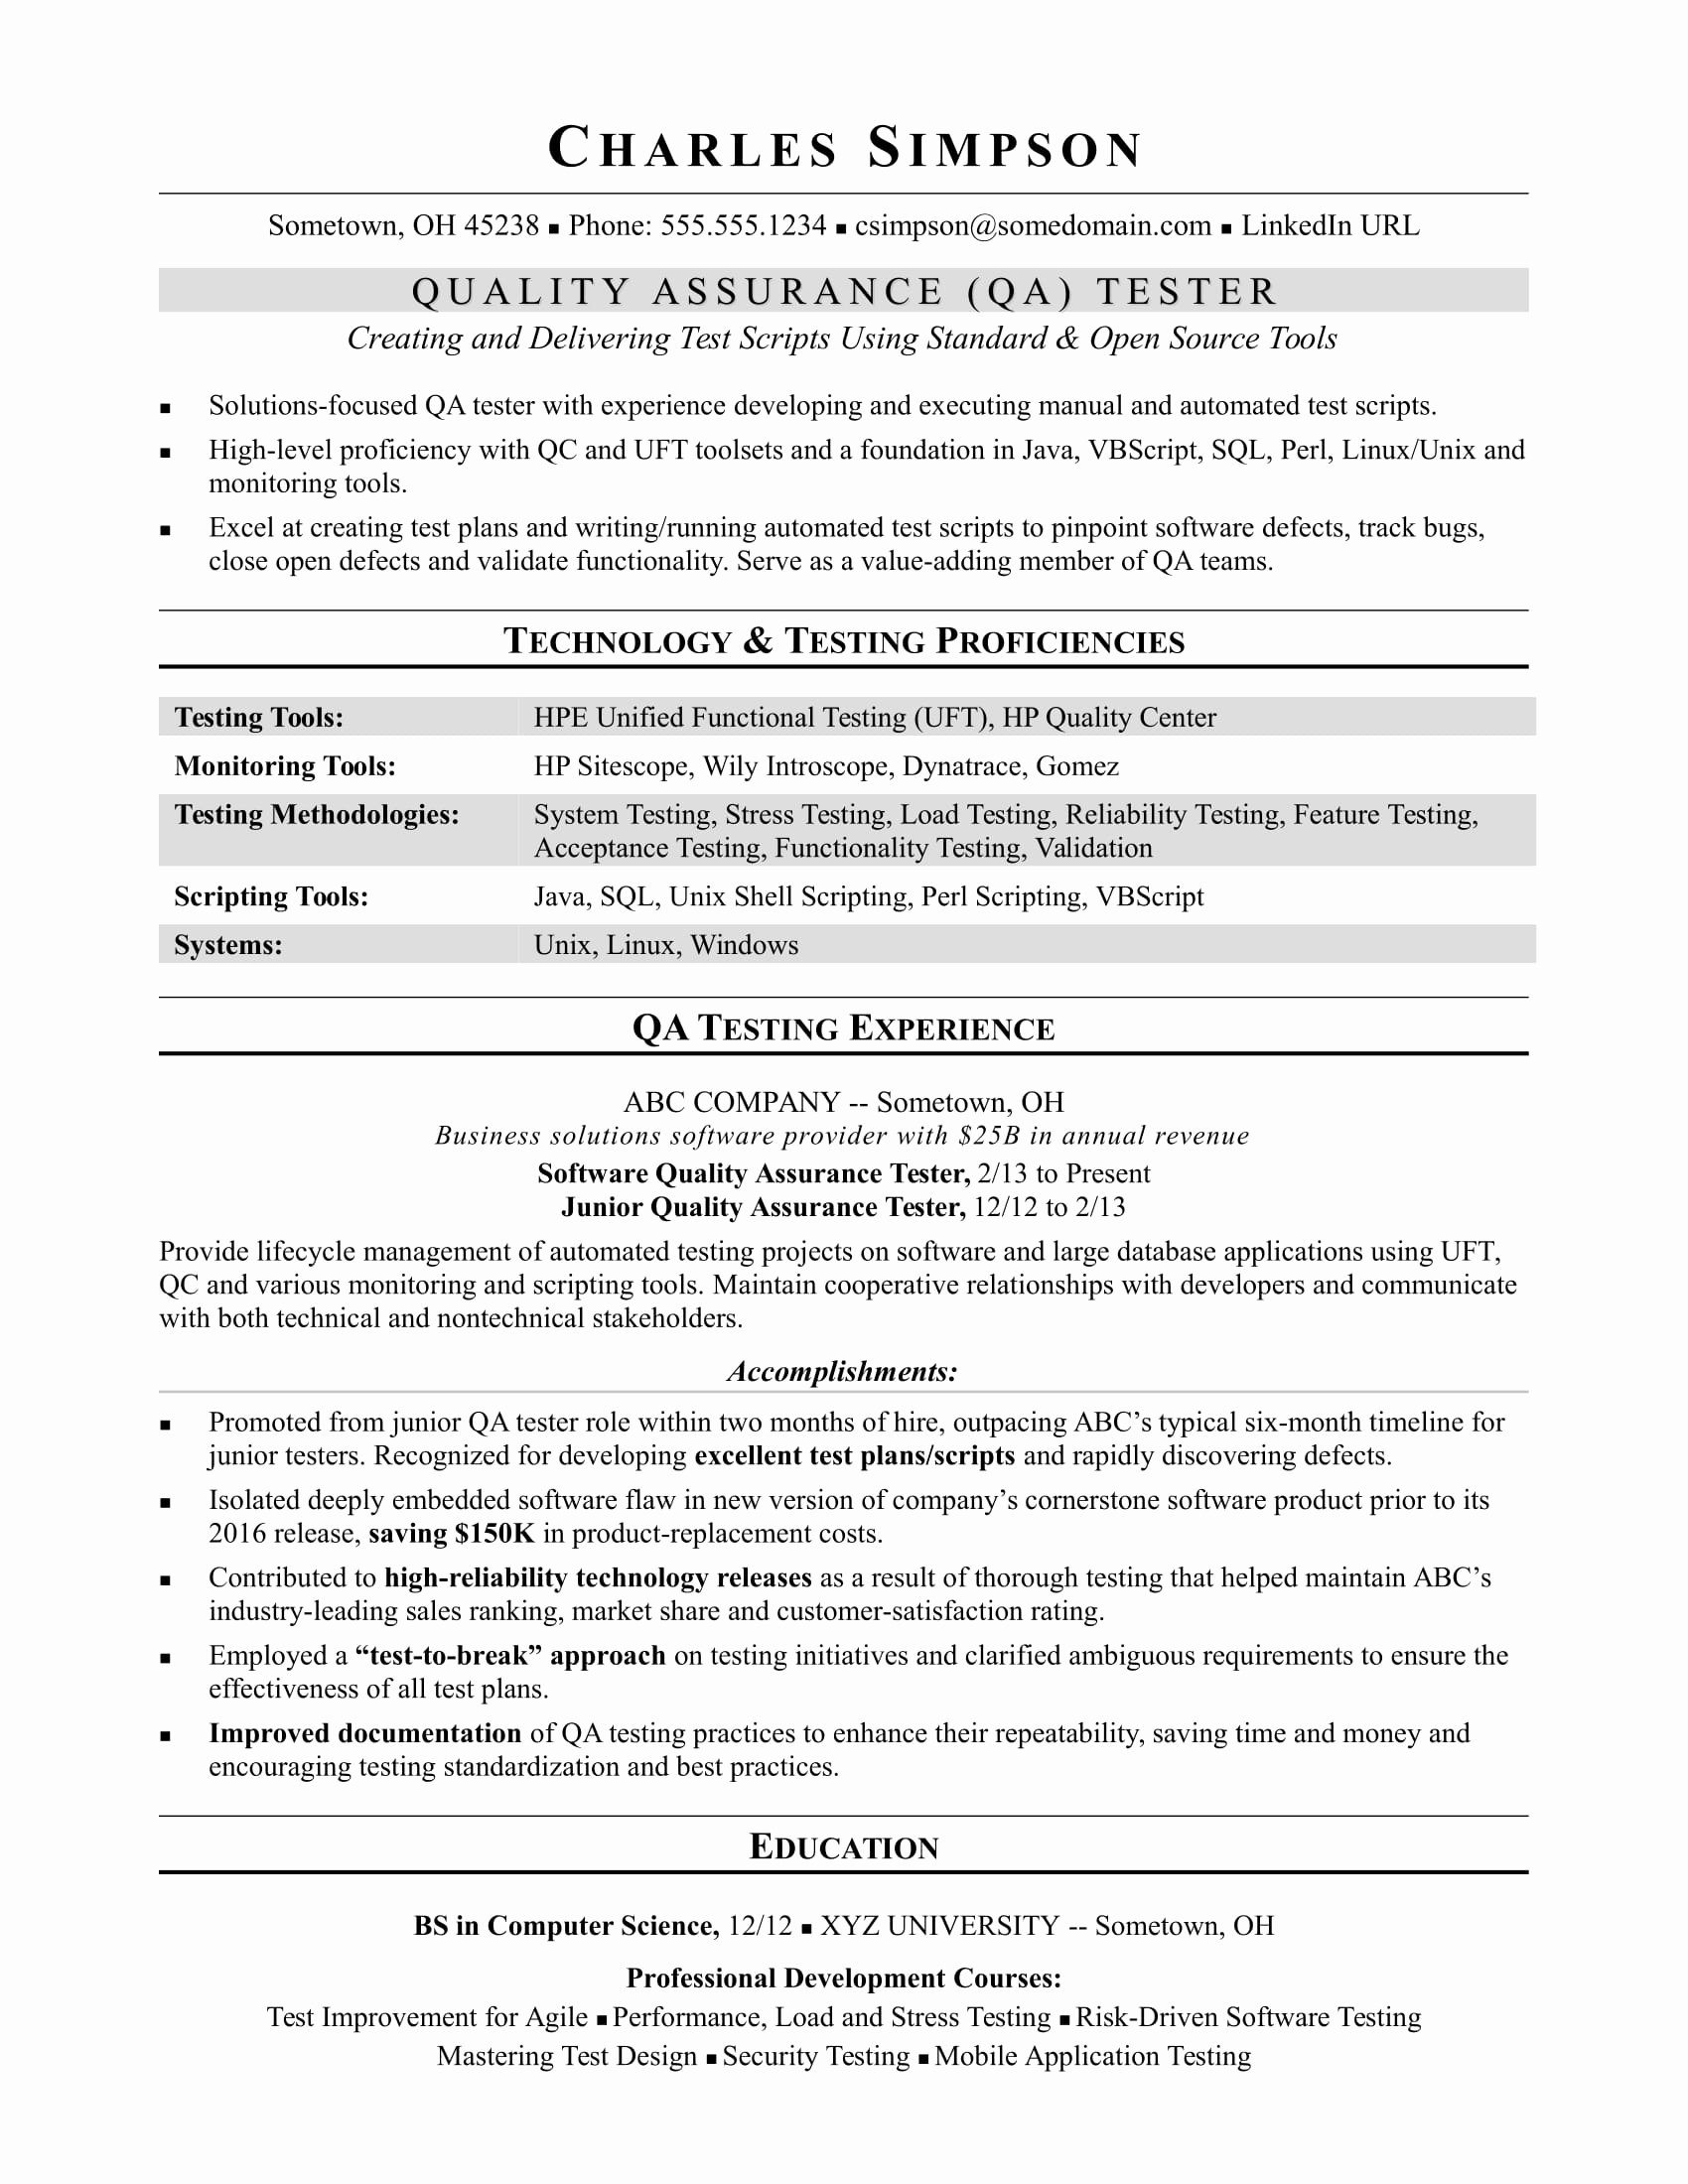 Sample Resume for A Midlevel Qa software Tester